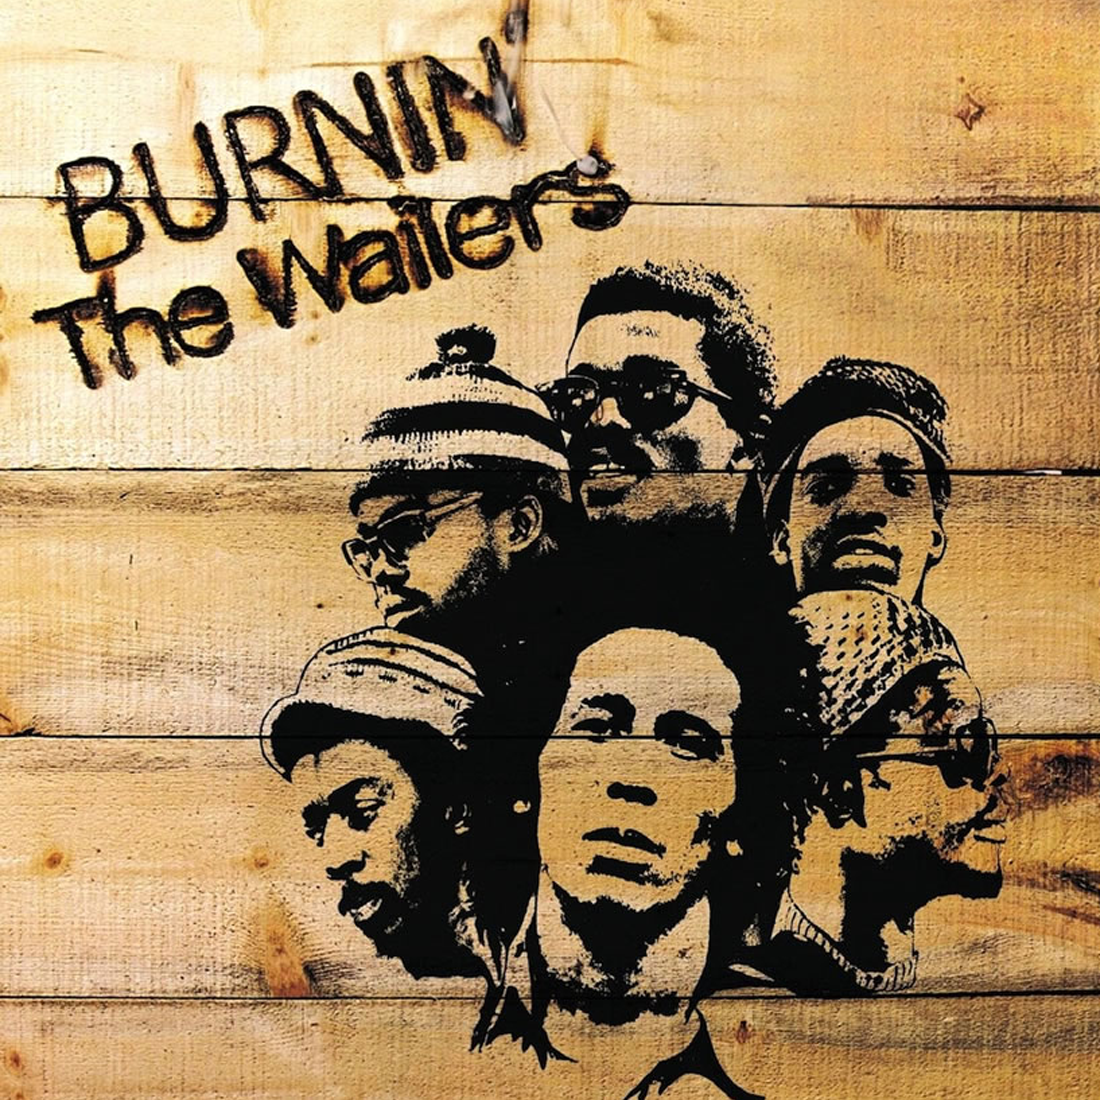 BOB MARLEY & THE WAILERS - Burnin' (Half Speed Master) - LP - 180g Vinyl